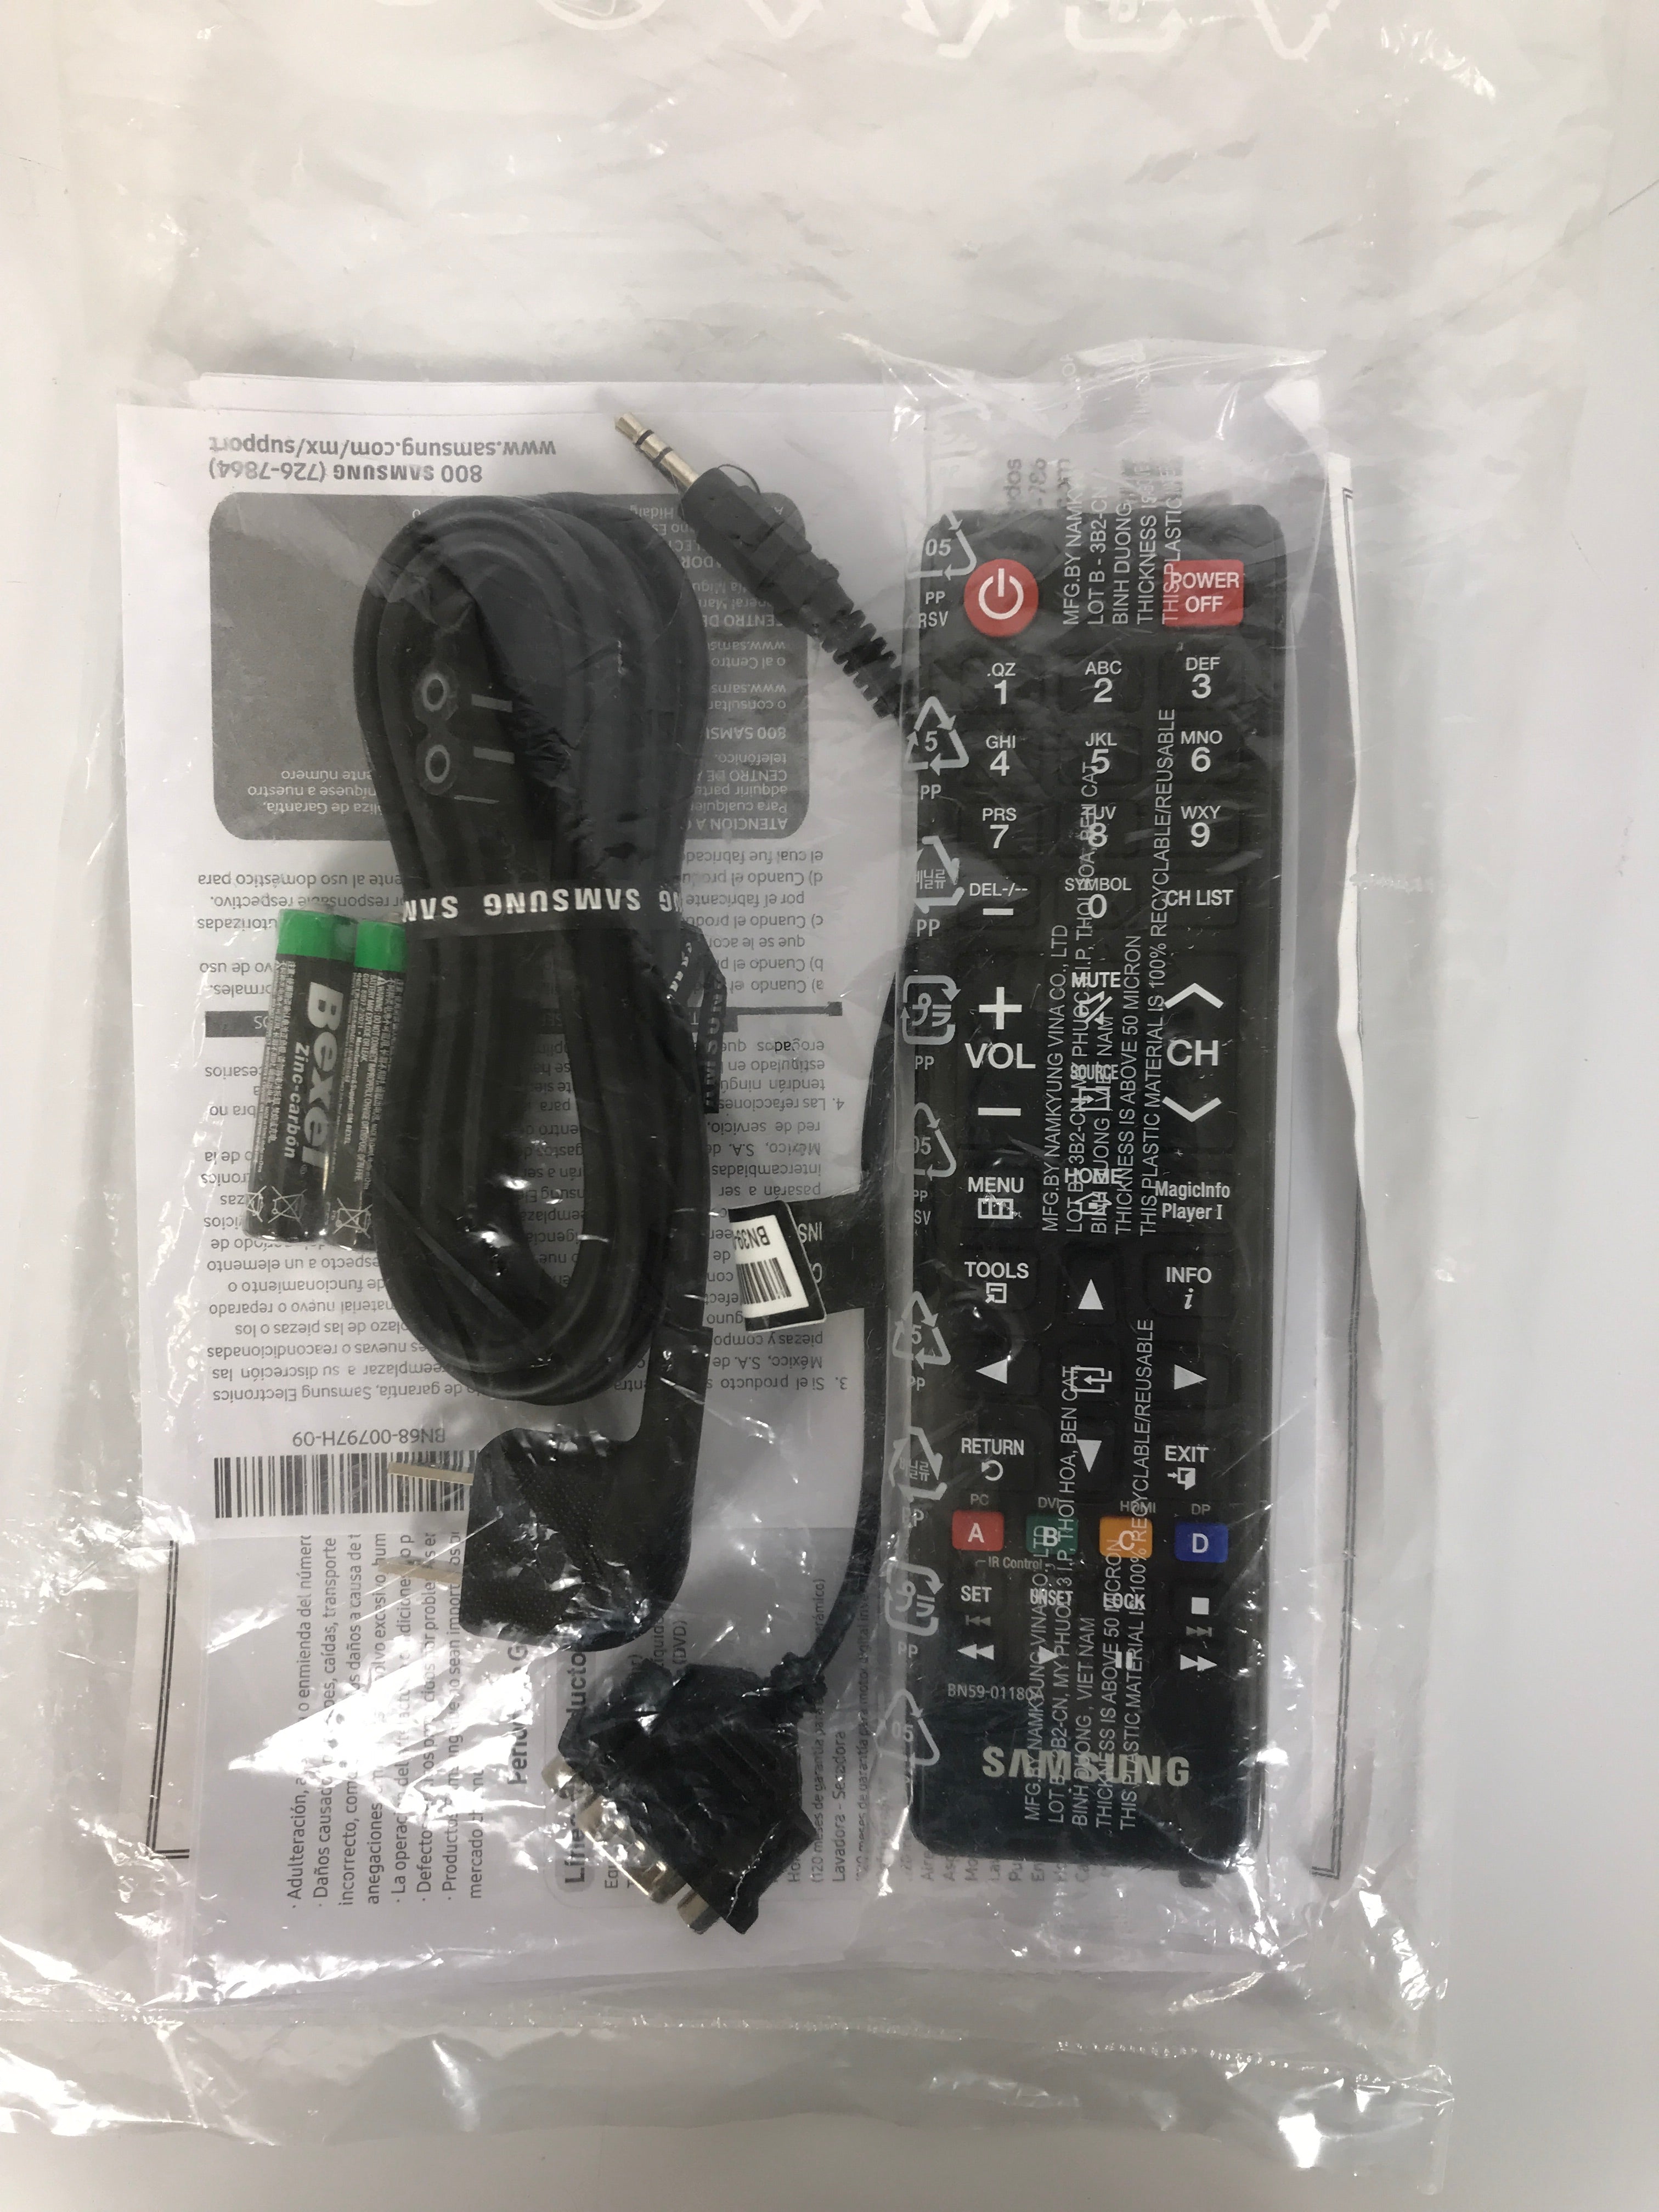 Samsung BN59-01180A TV Remote Set *New*